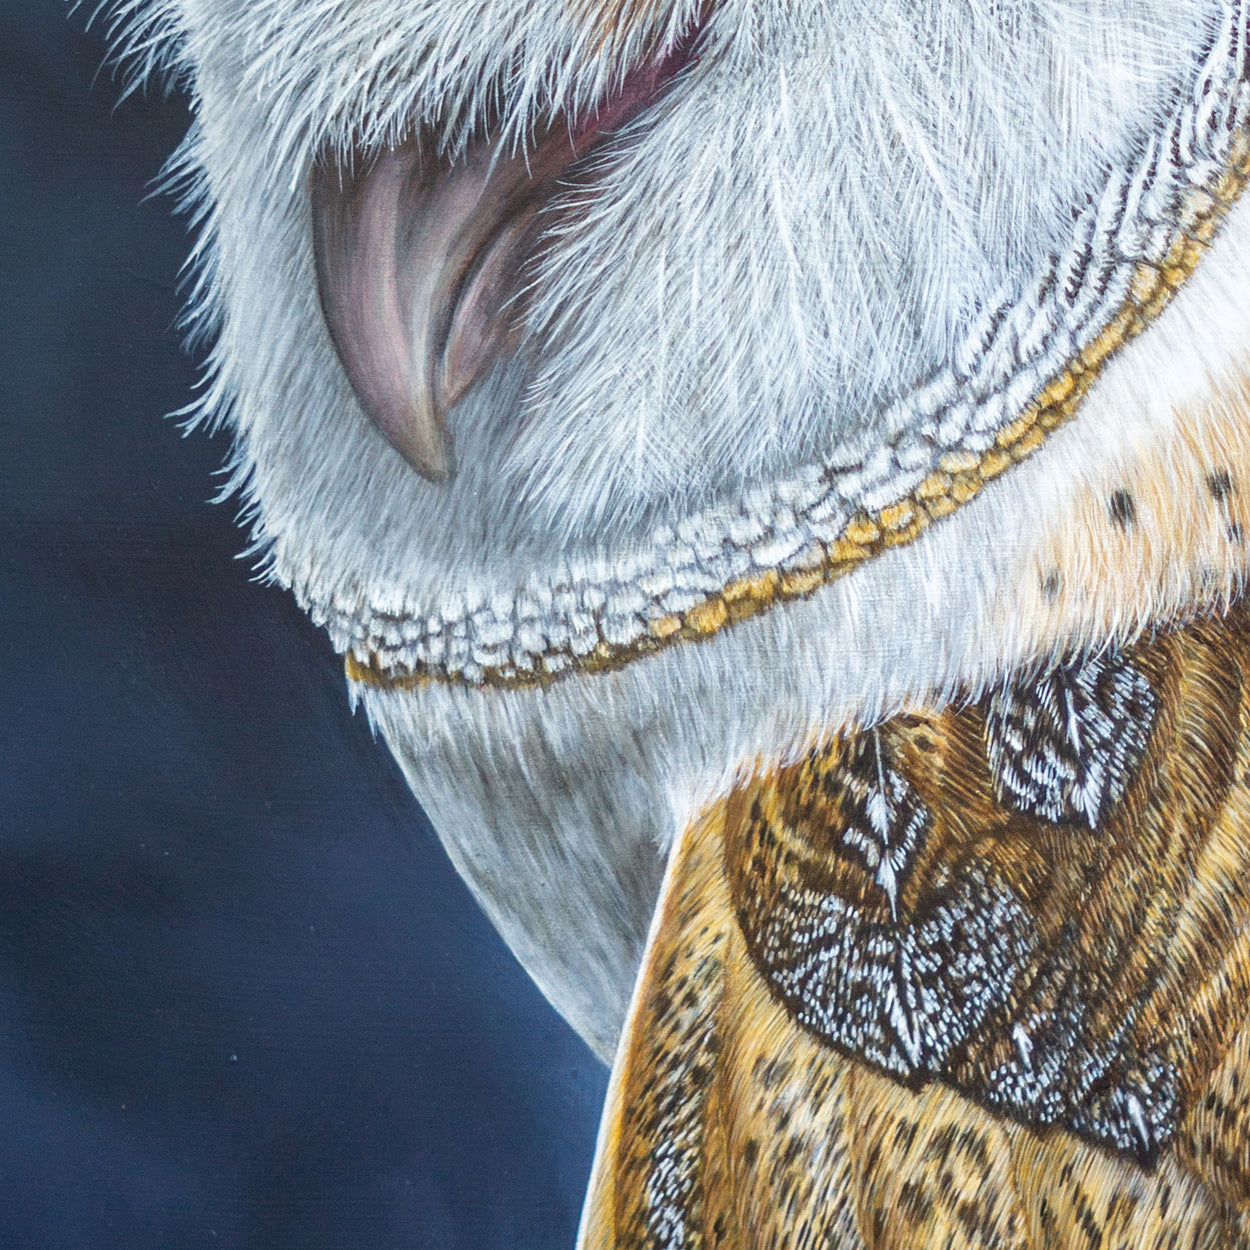 Barn owl portrait painting close-up 2 - Jill Dimond